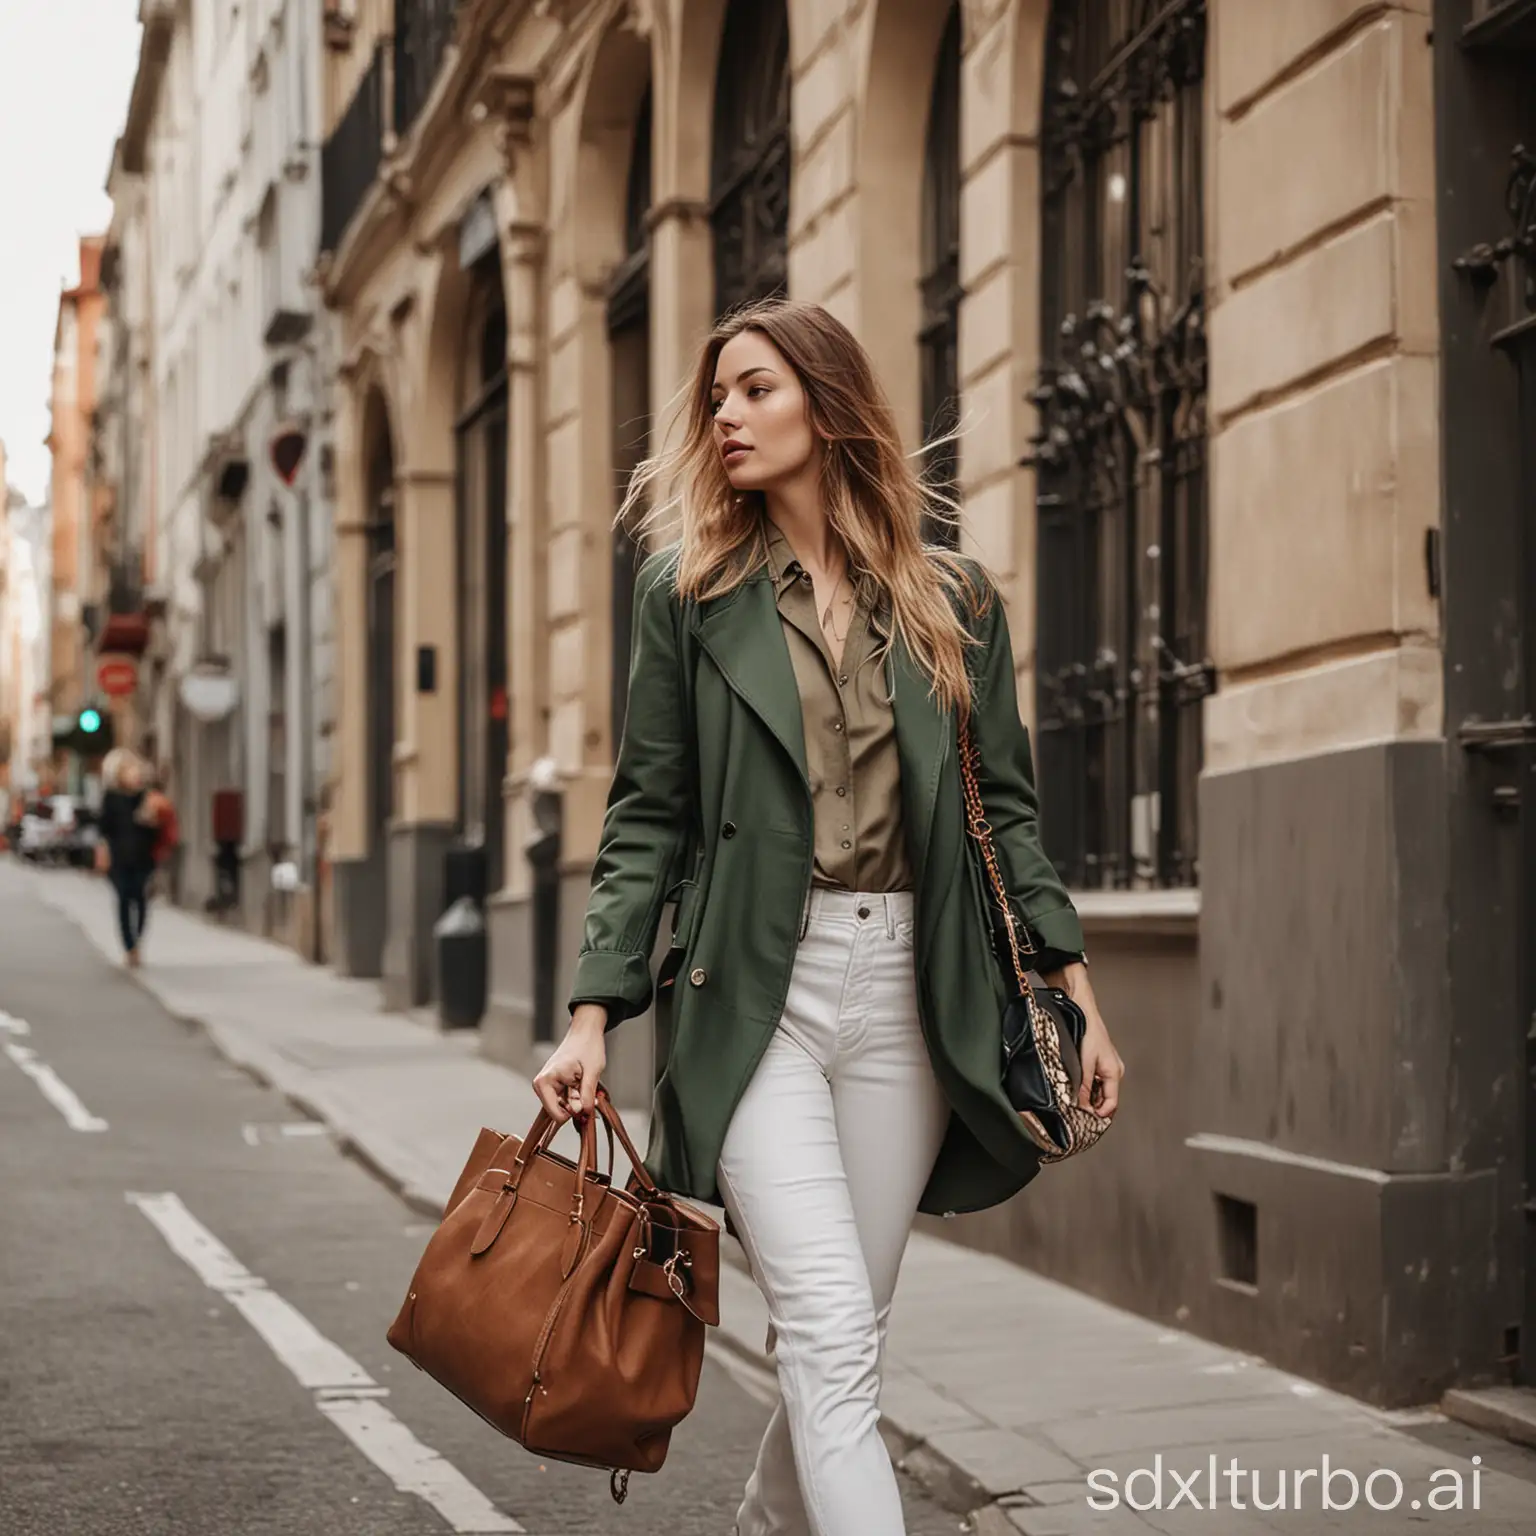 Stylish-Woman-with-Designer-Handbag-Walking-on-Urban-Street